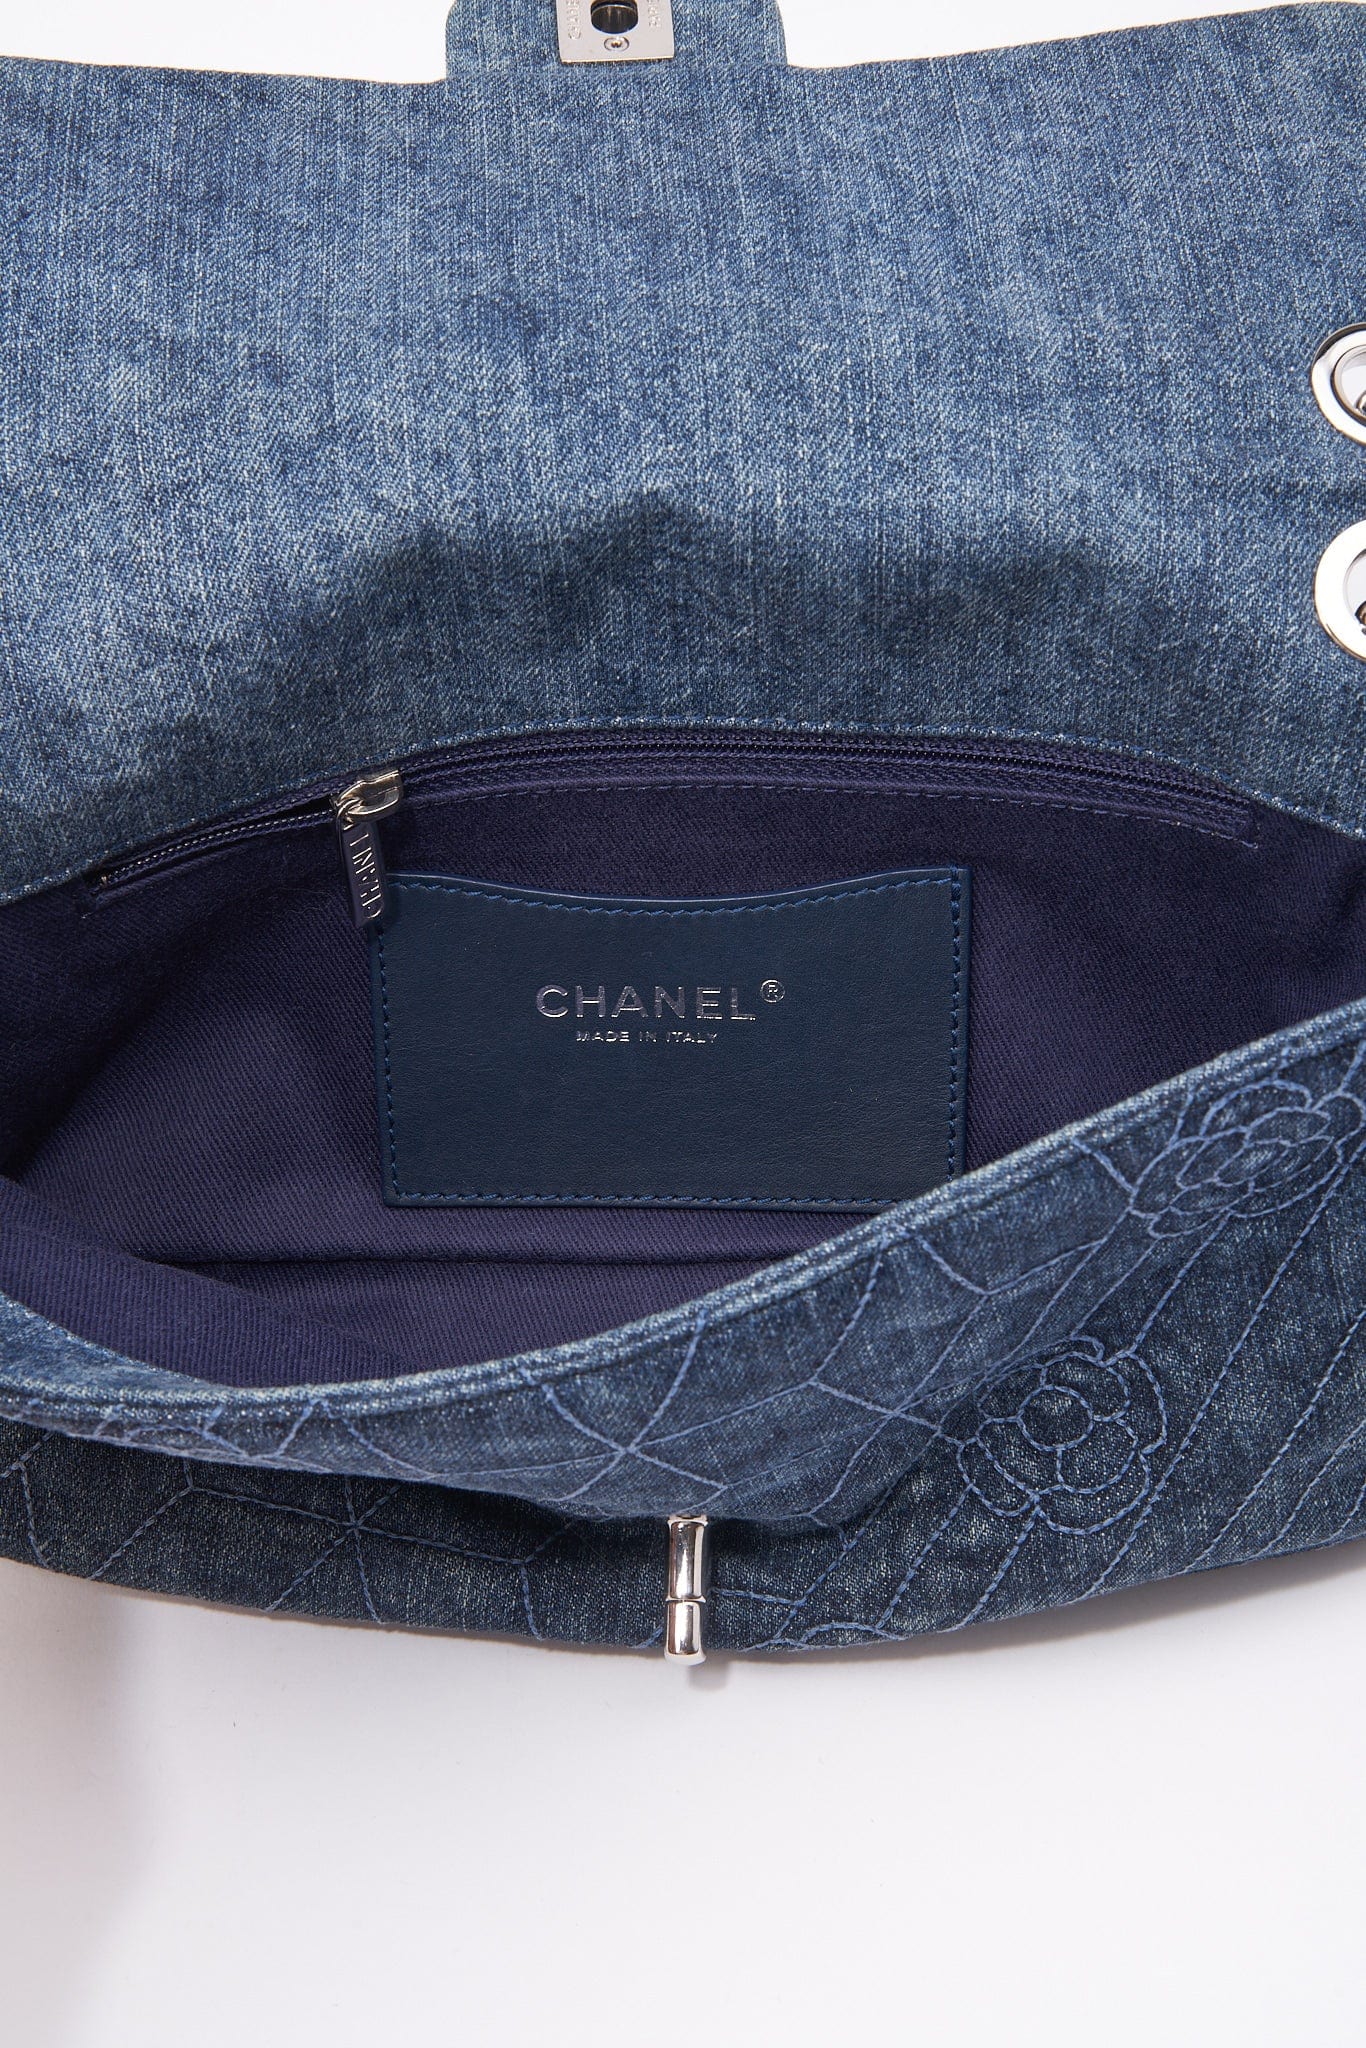 Chanel Blue Denim Camellia Embroidered CC Flap Bag